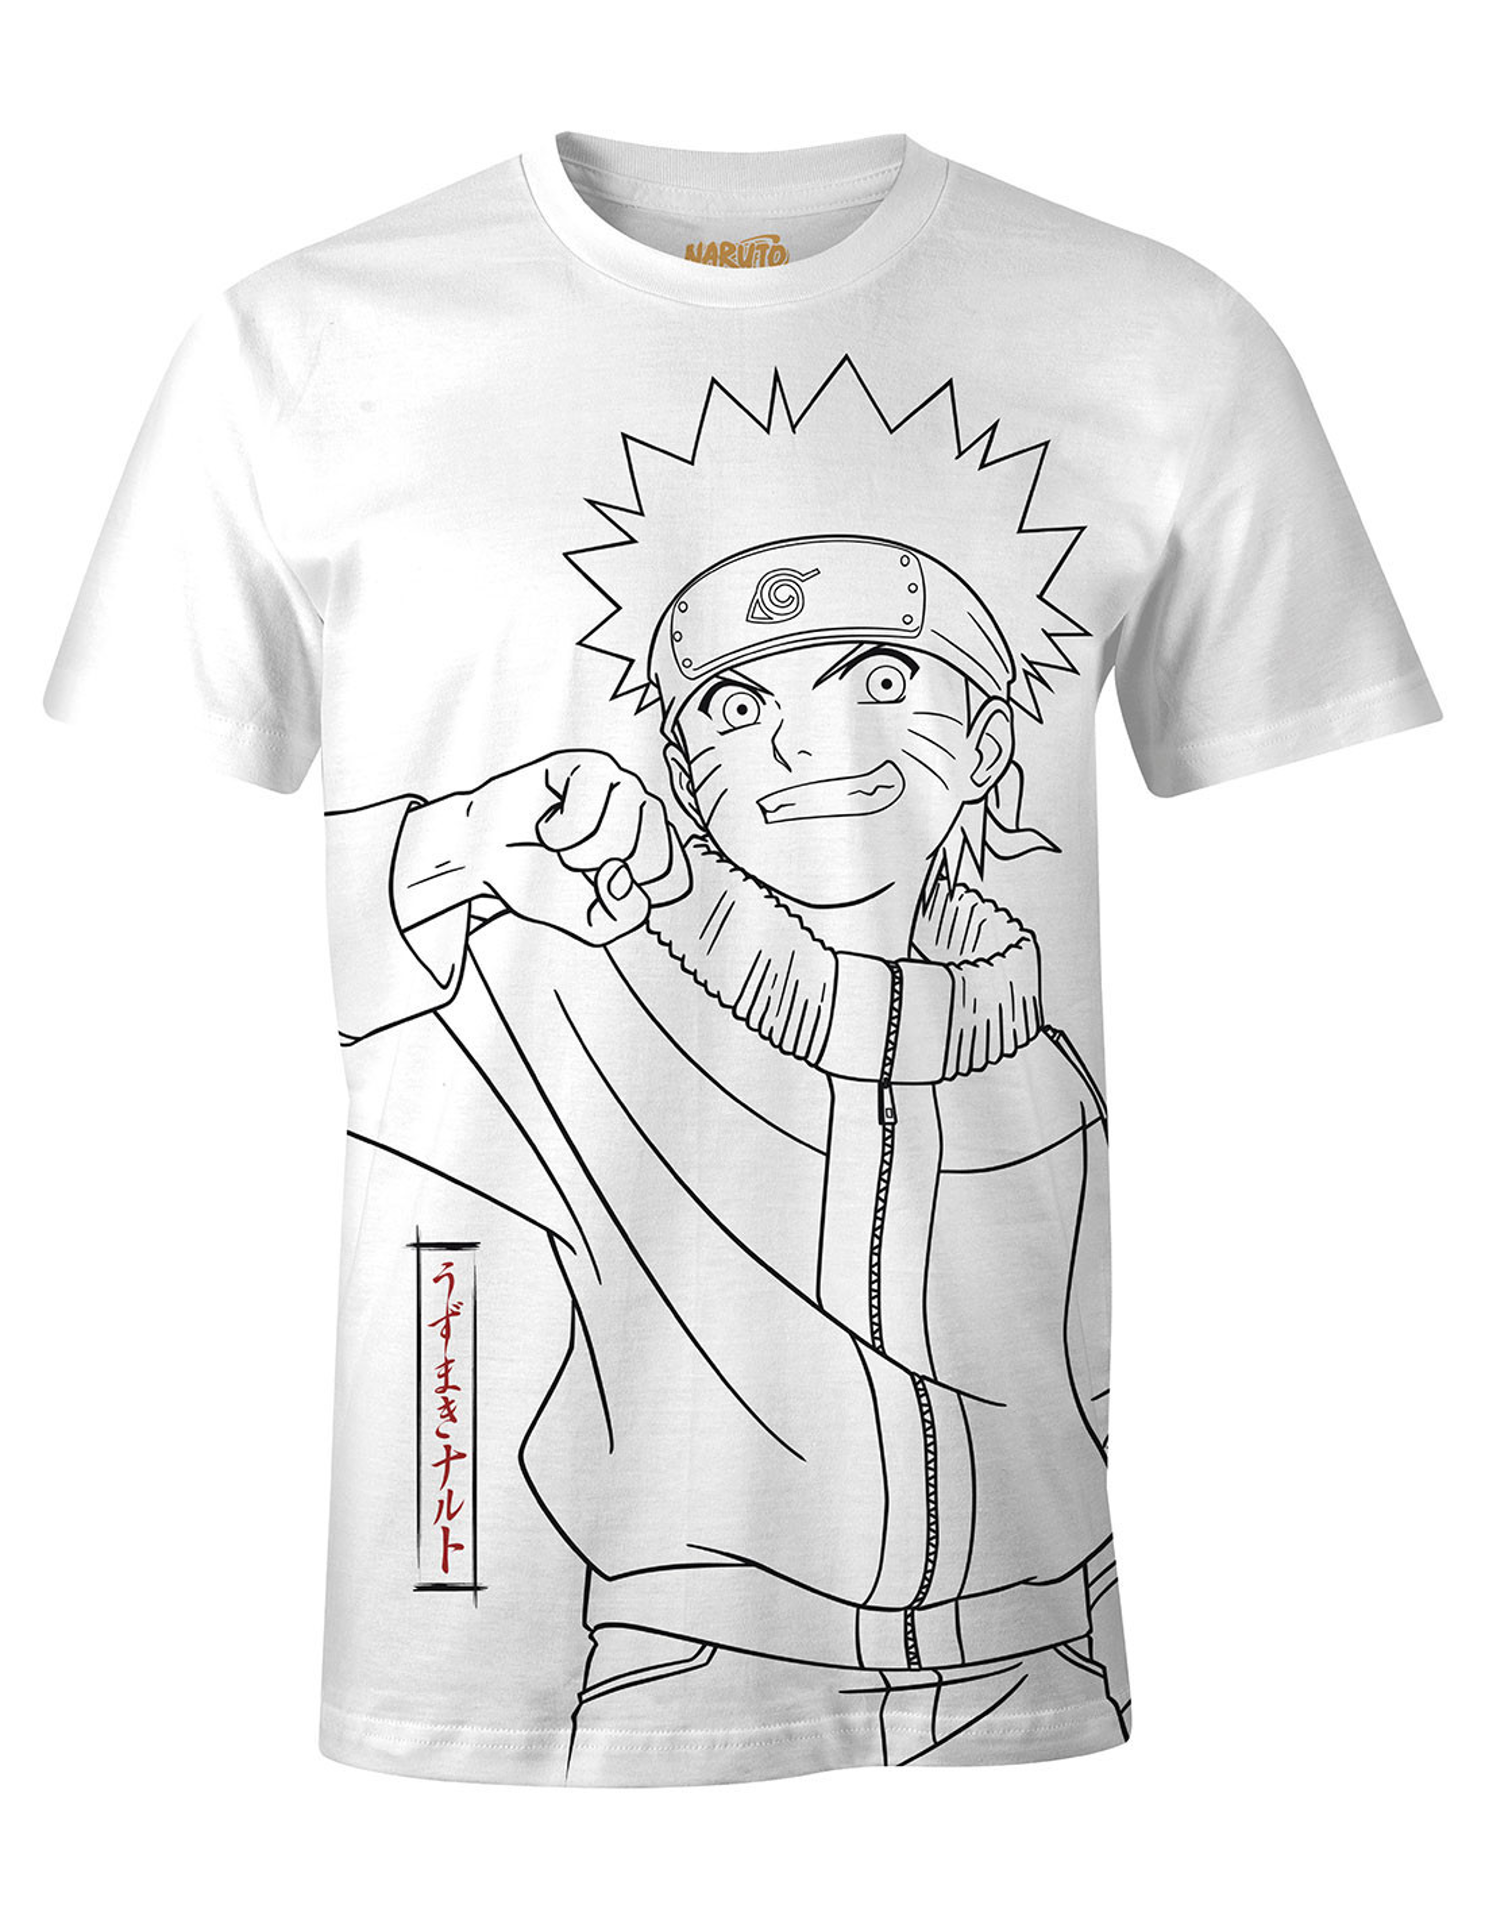 Naruto - T-shirt Blanc "Japanese Art" - S